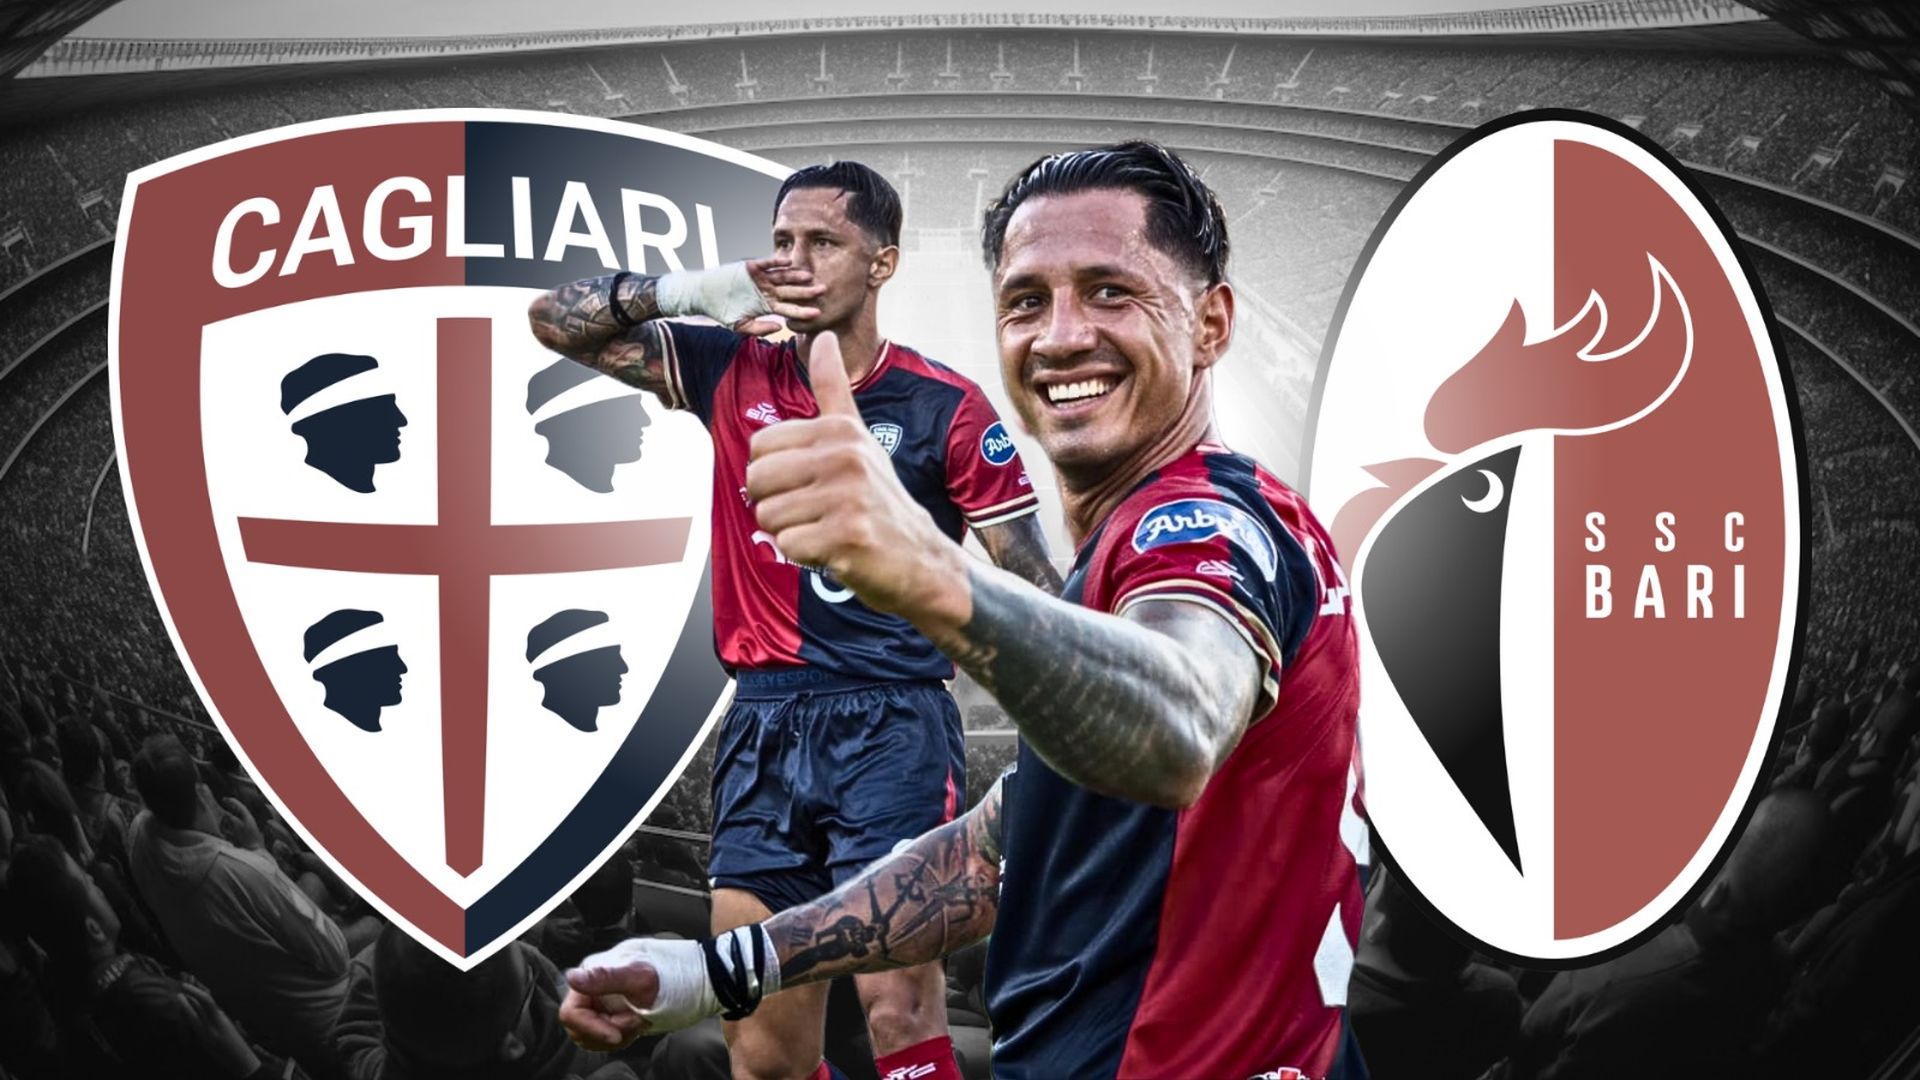 Cagliari vs Bari EN VIVO AHORA: con Gianluca Lapadula, final de ascenso ida en Serie B